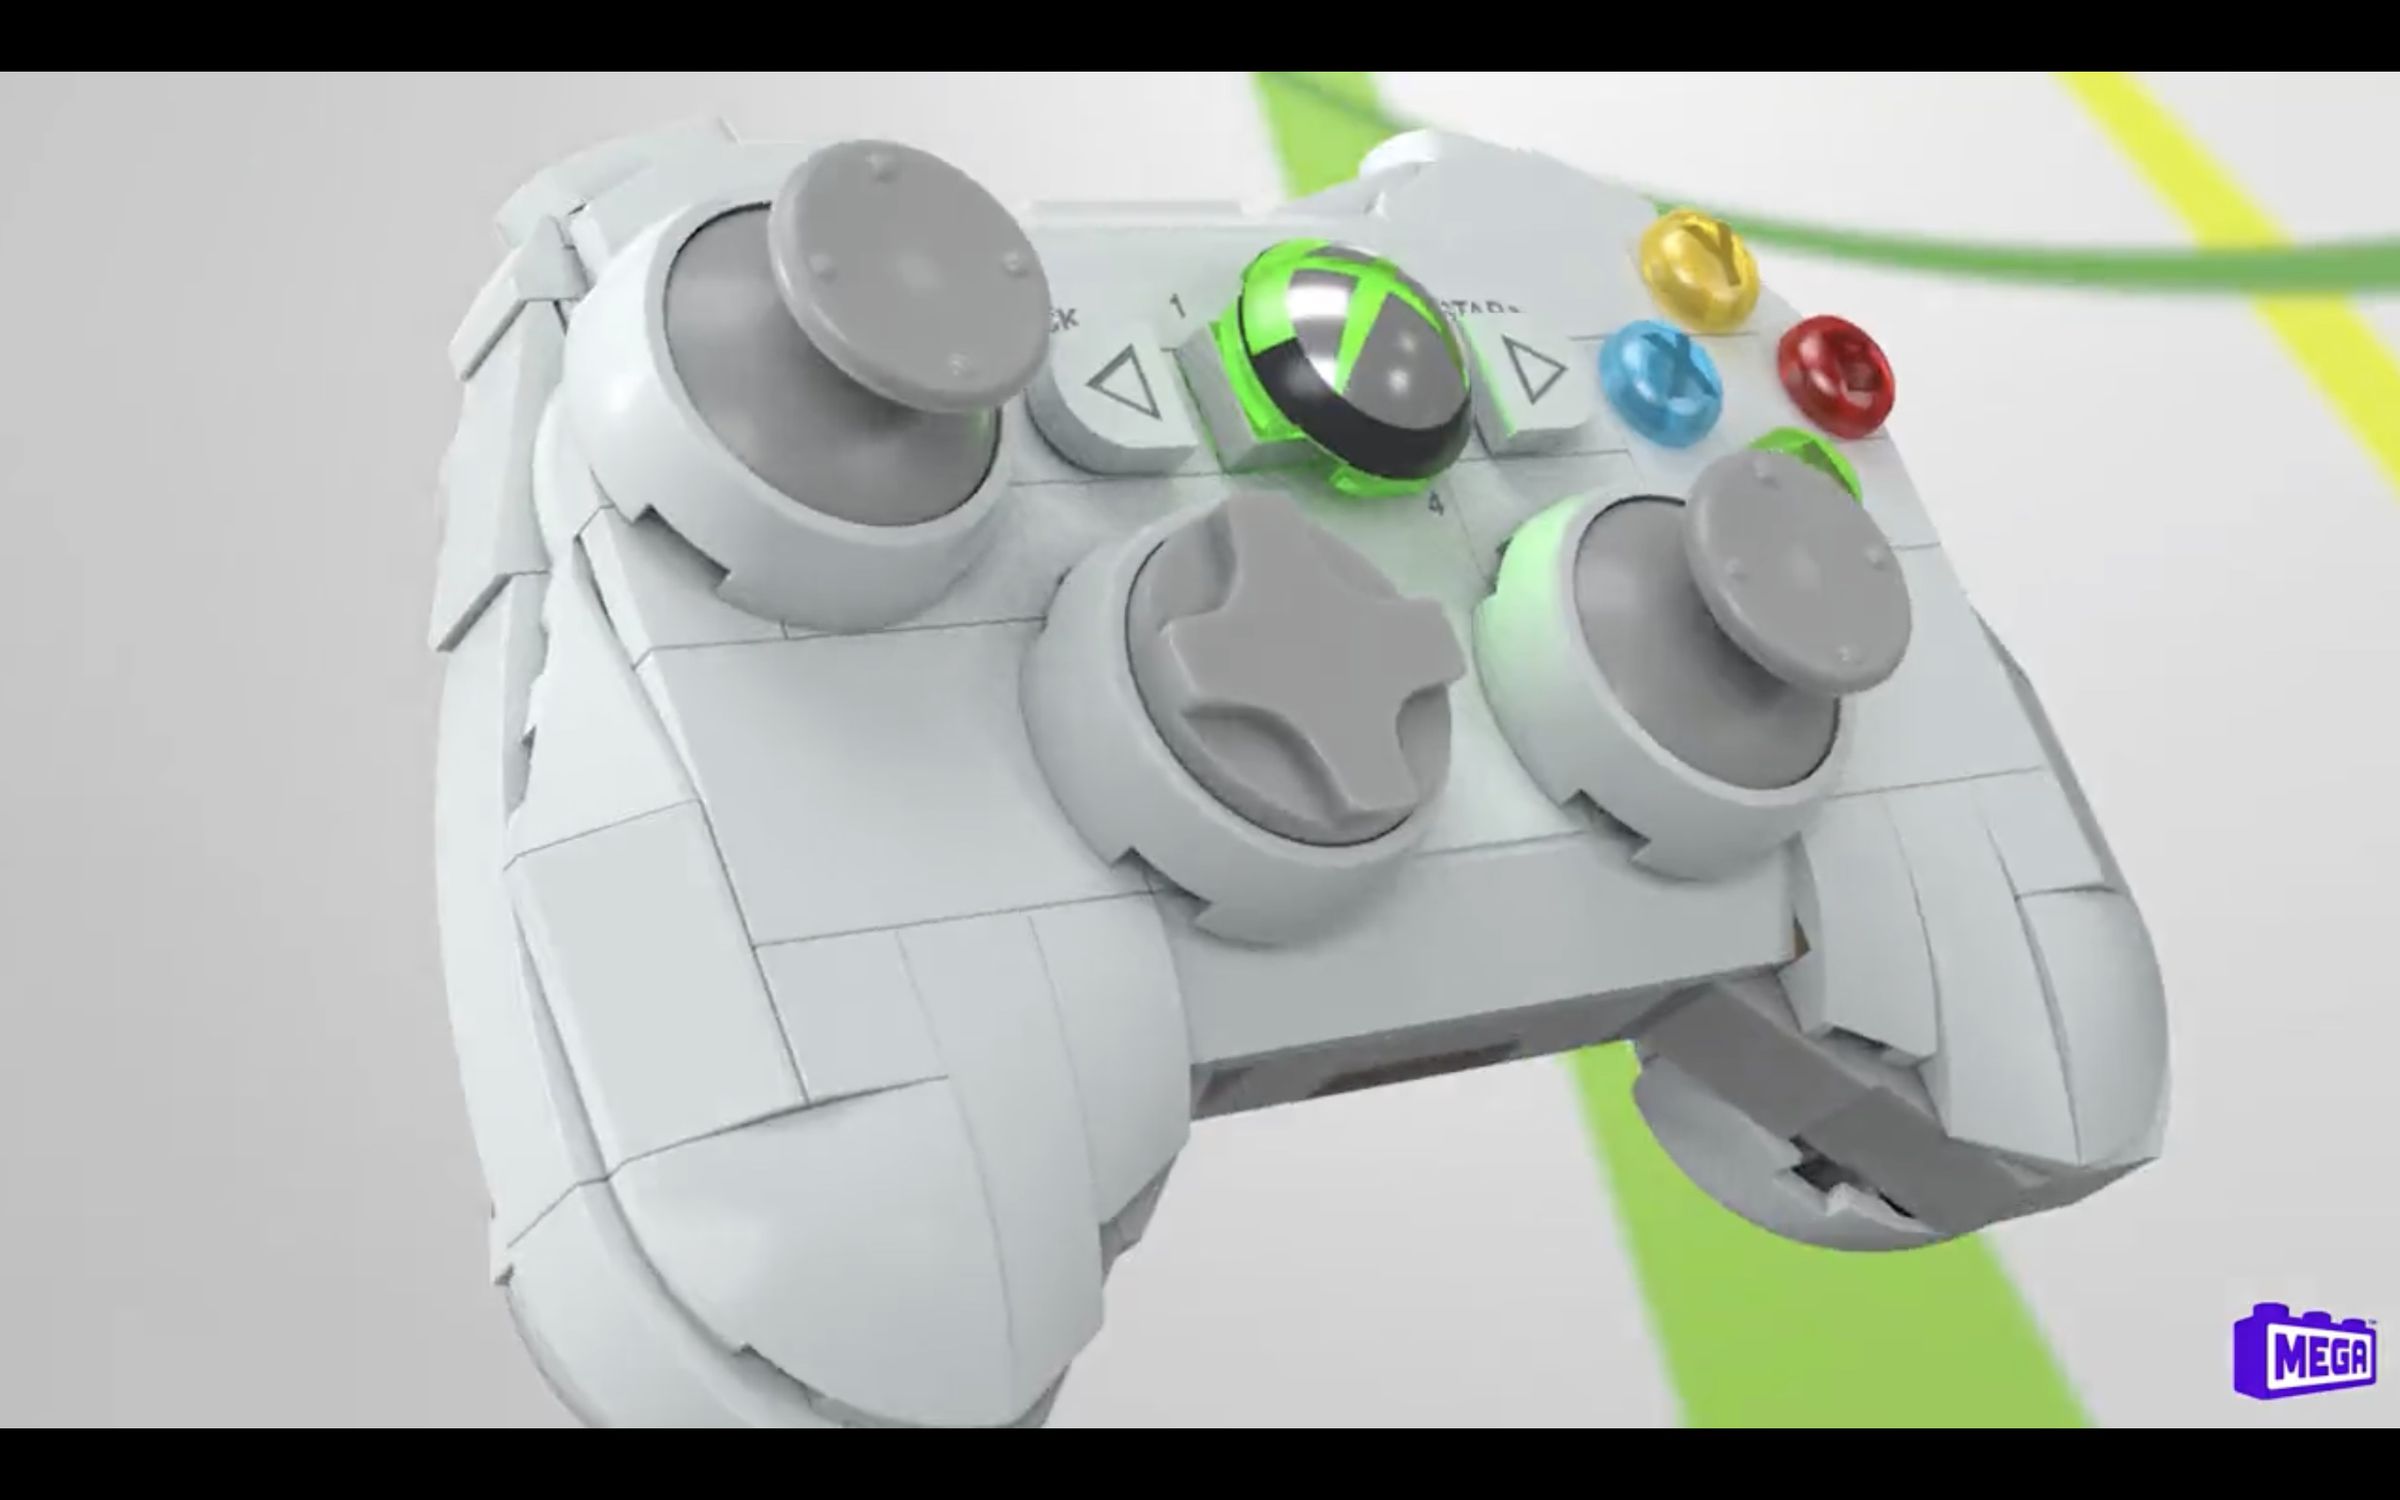 Image of an Xbox 360 replica controller made of Mega building blocks.